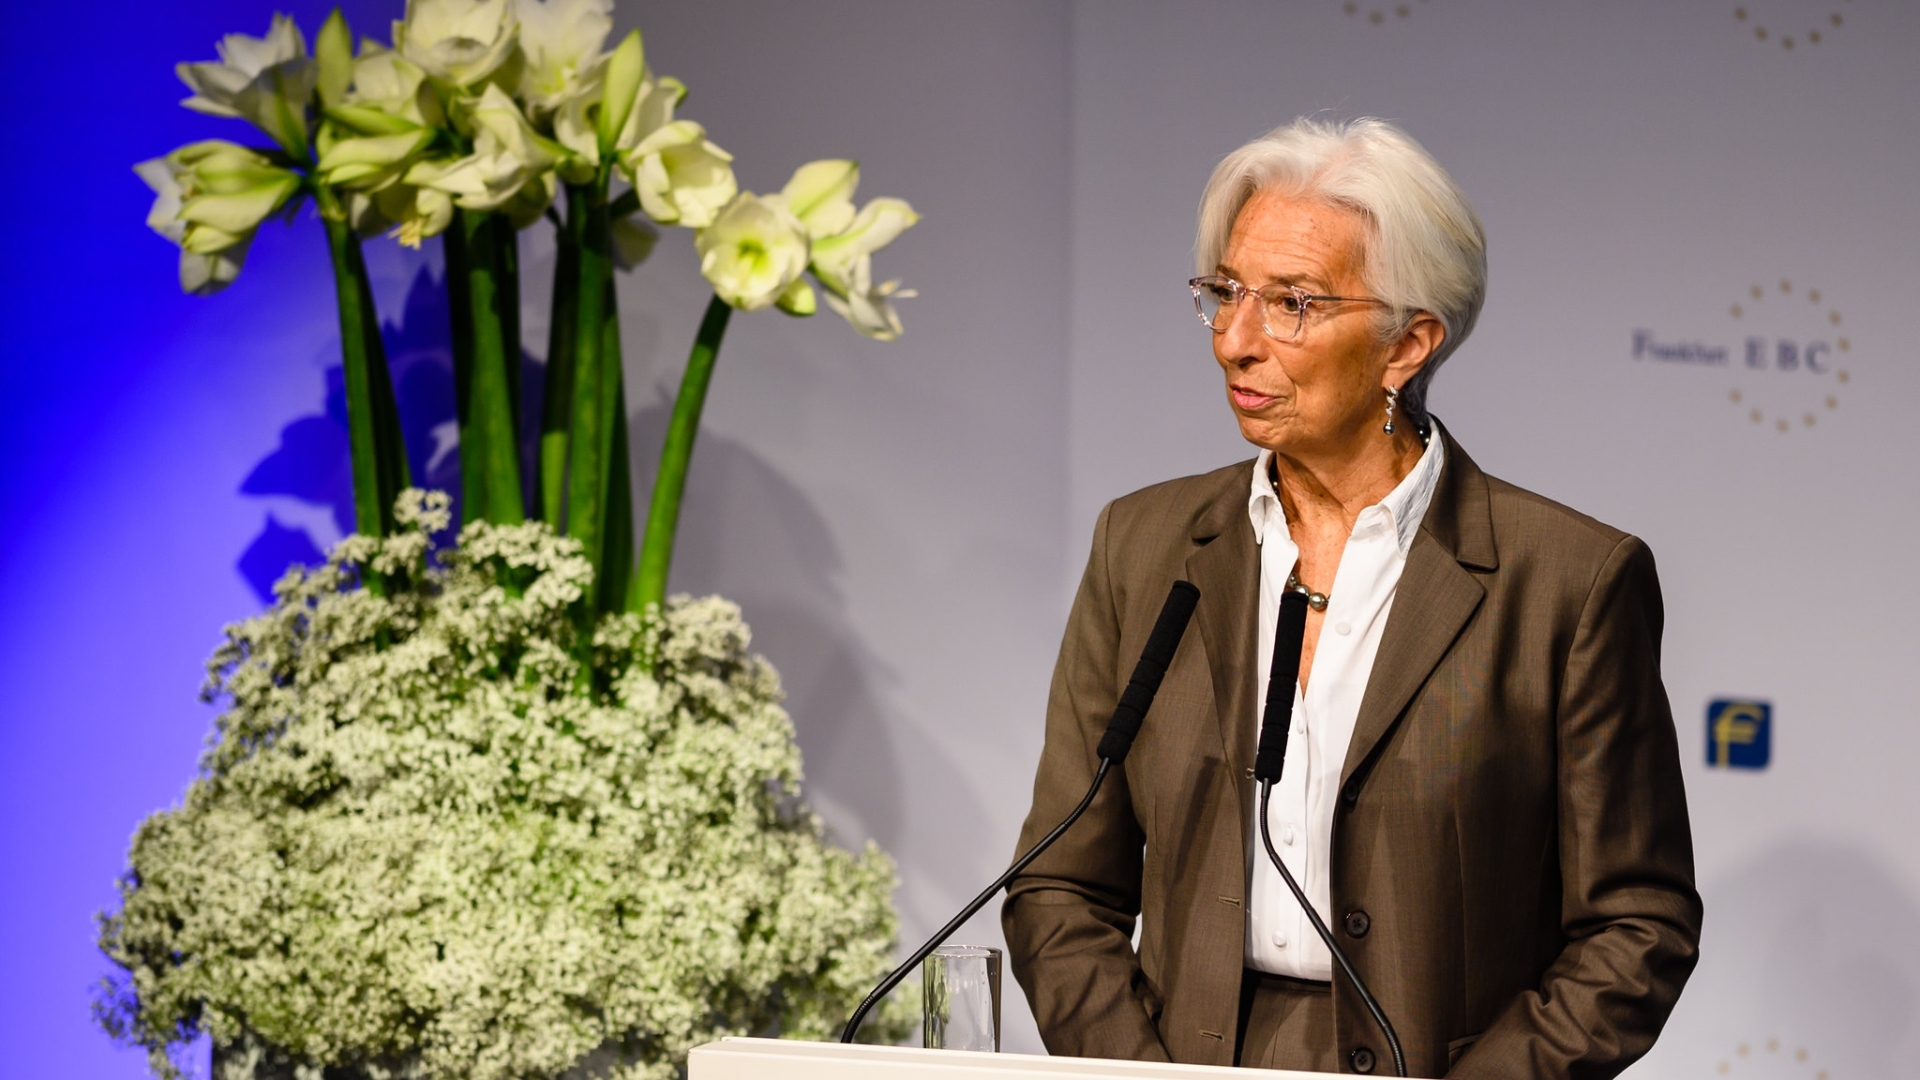 Lagarde Christine_16-9_1920_c Martin Lamberts, European Central Bank 2019